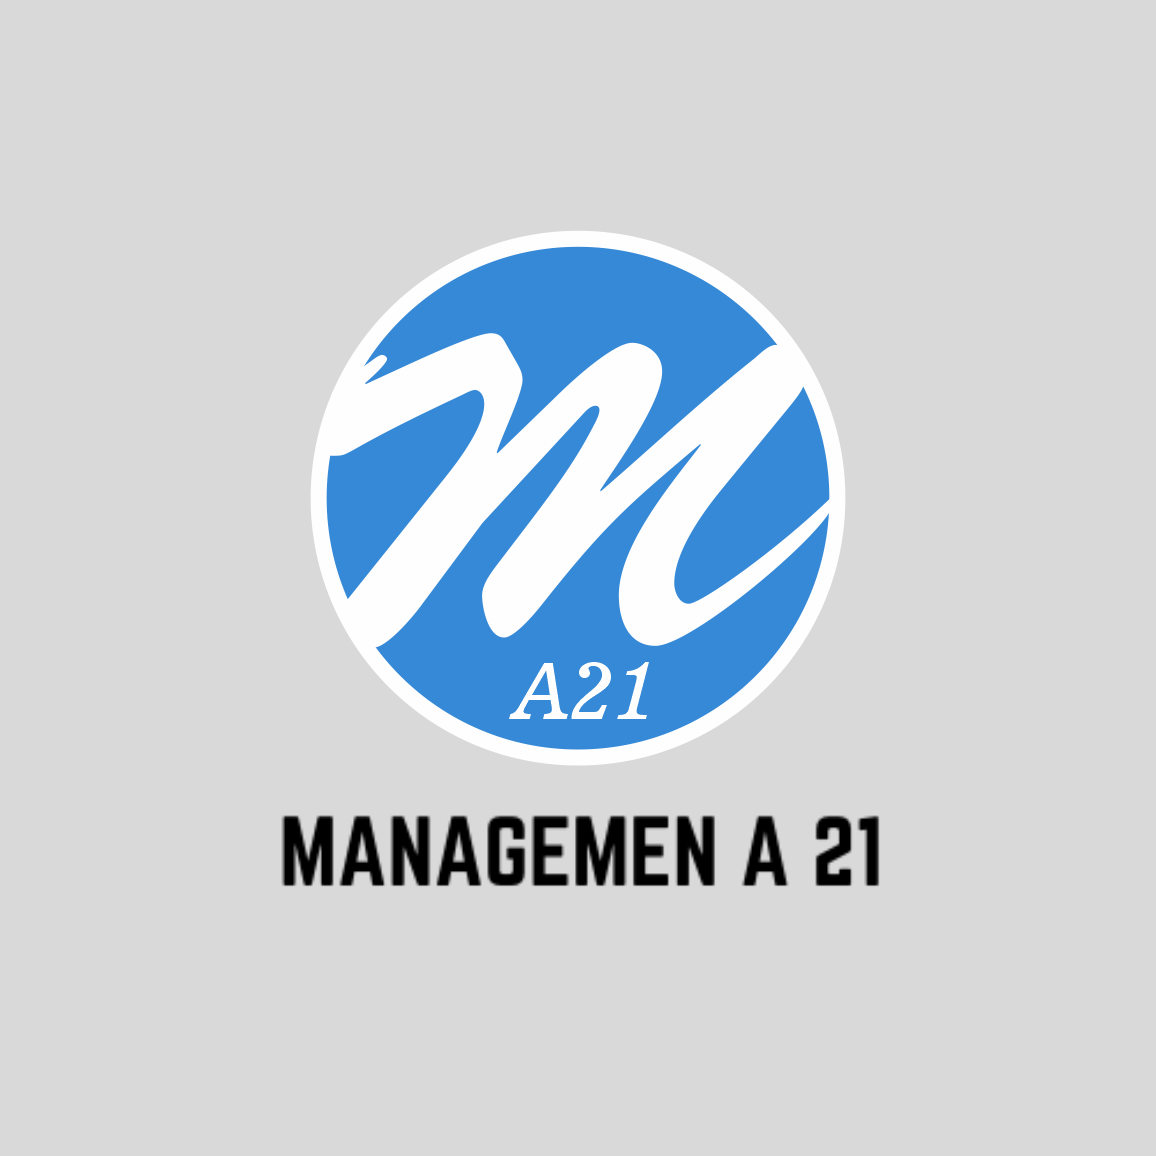 ABOUT – Management A 2021